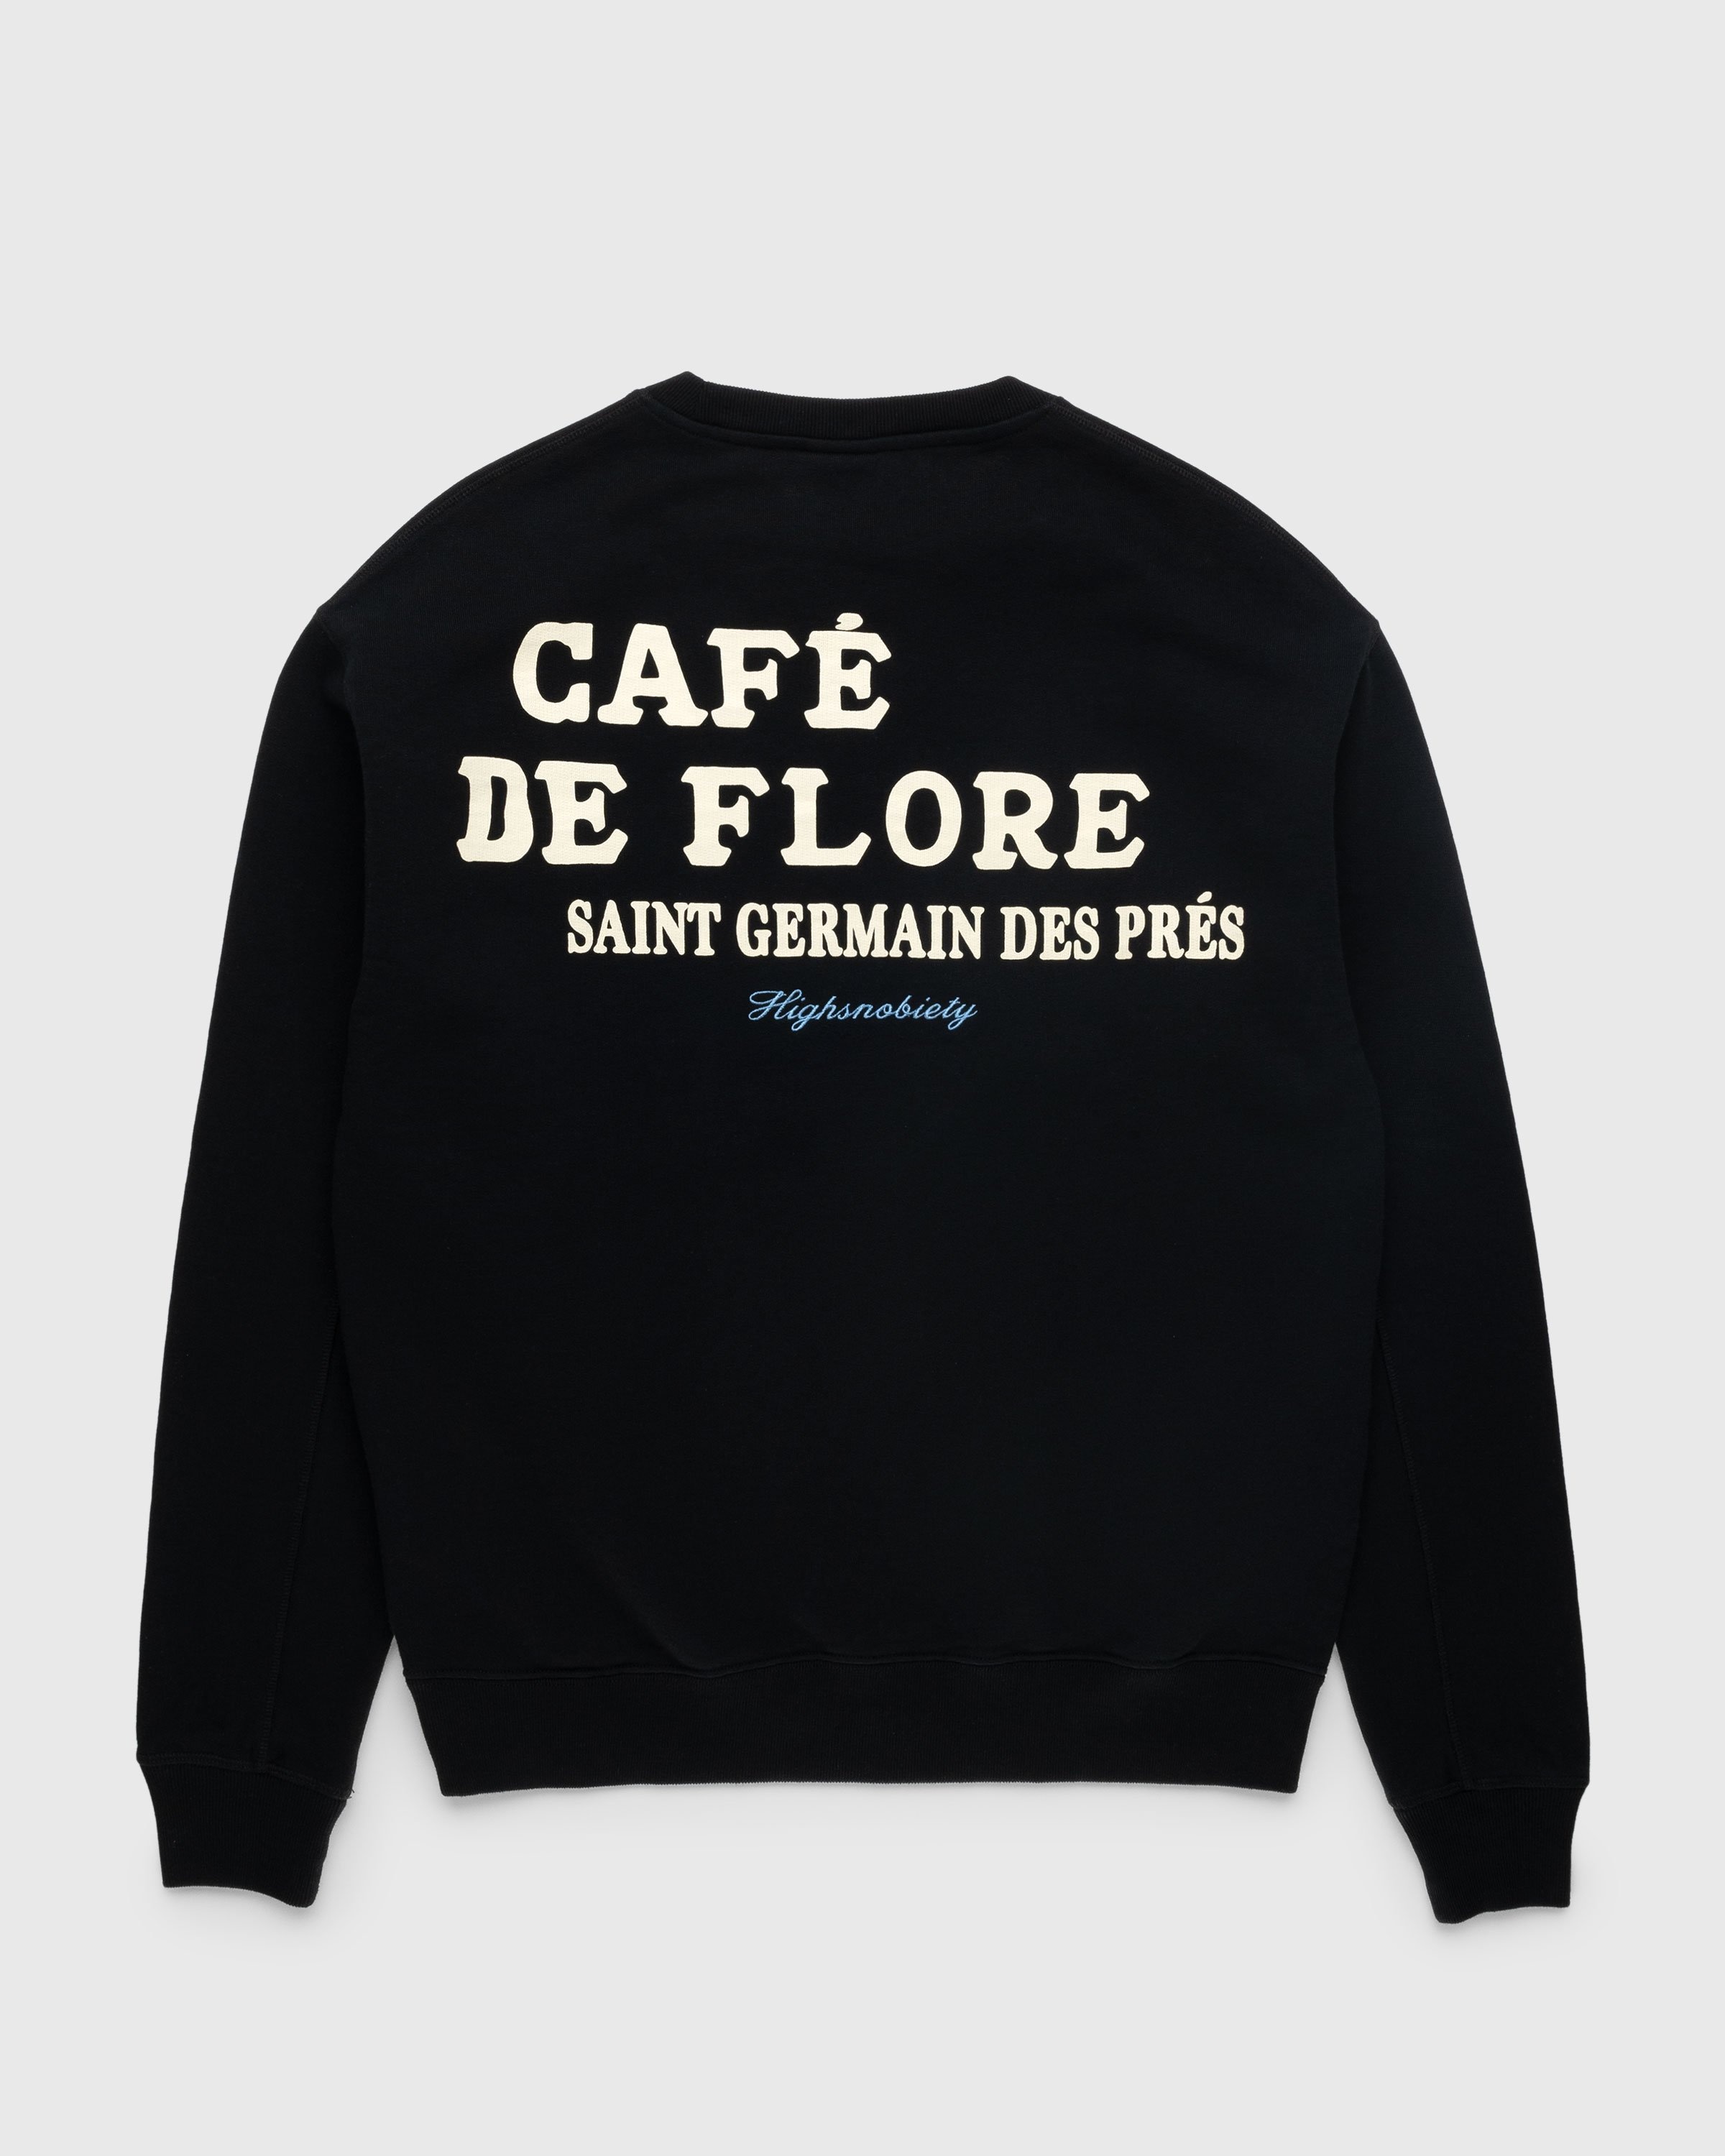 Balance Café - Sweatshirt for Men